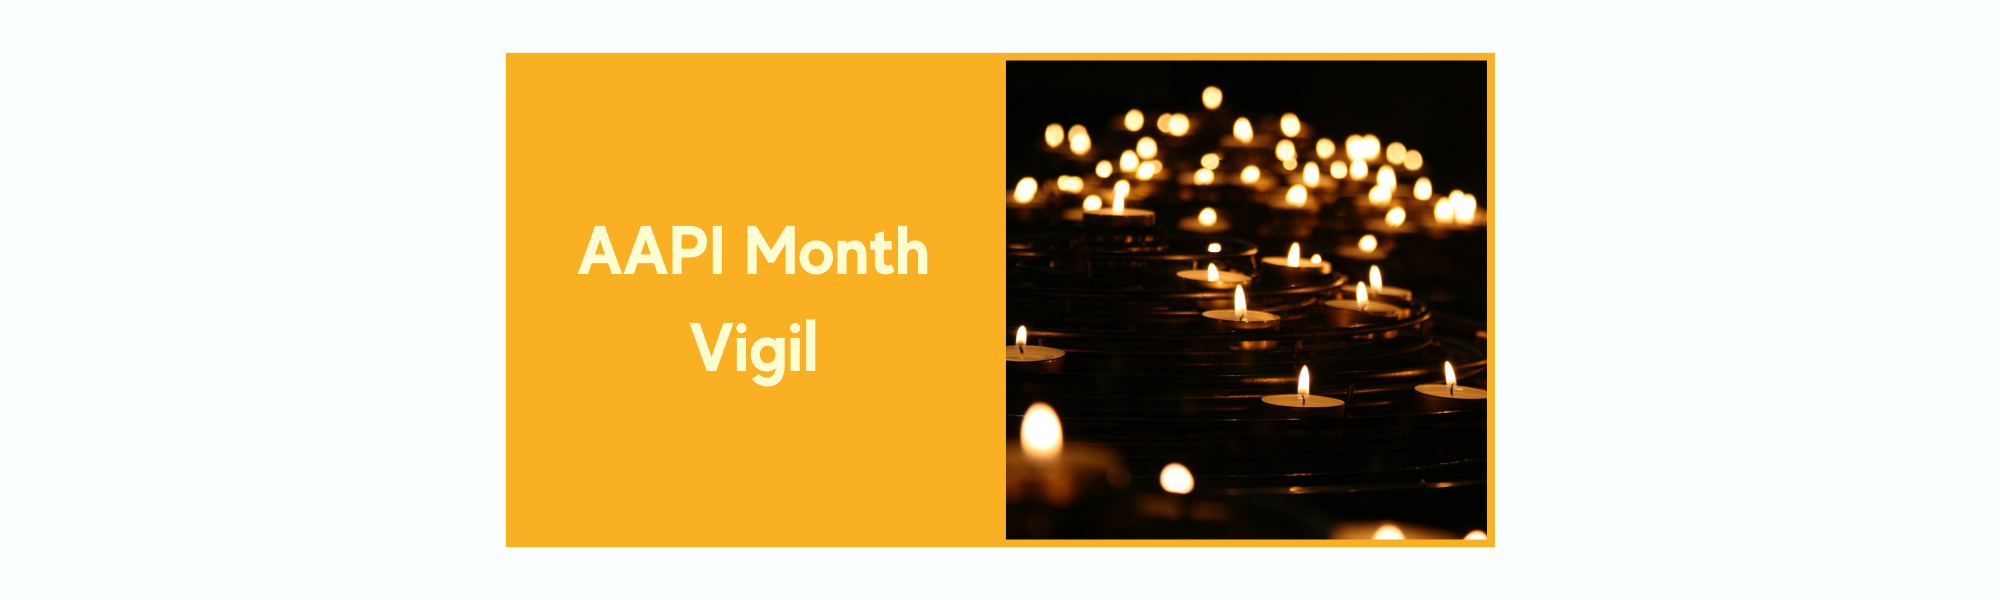 AAPI-Month-Vigil.png